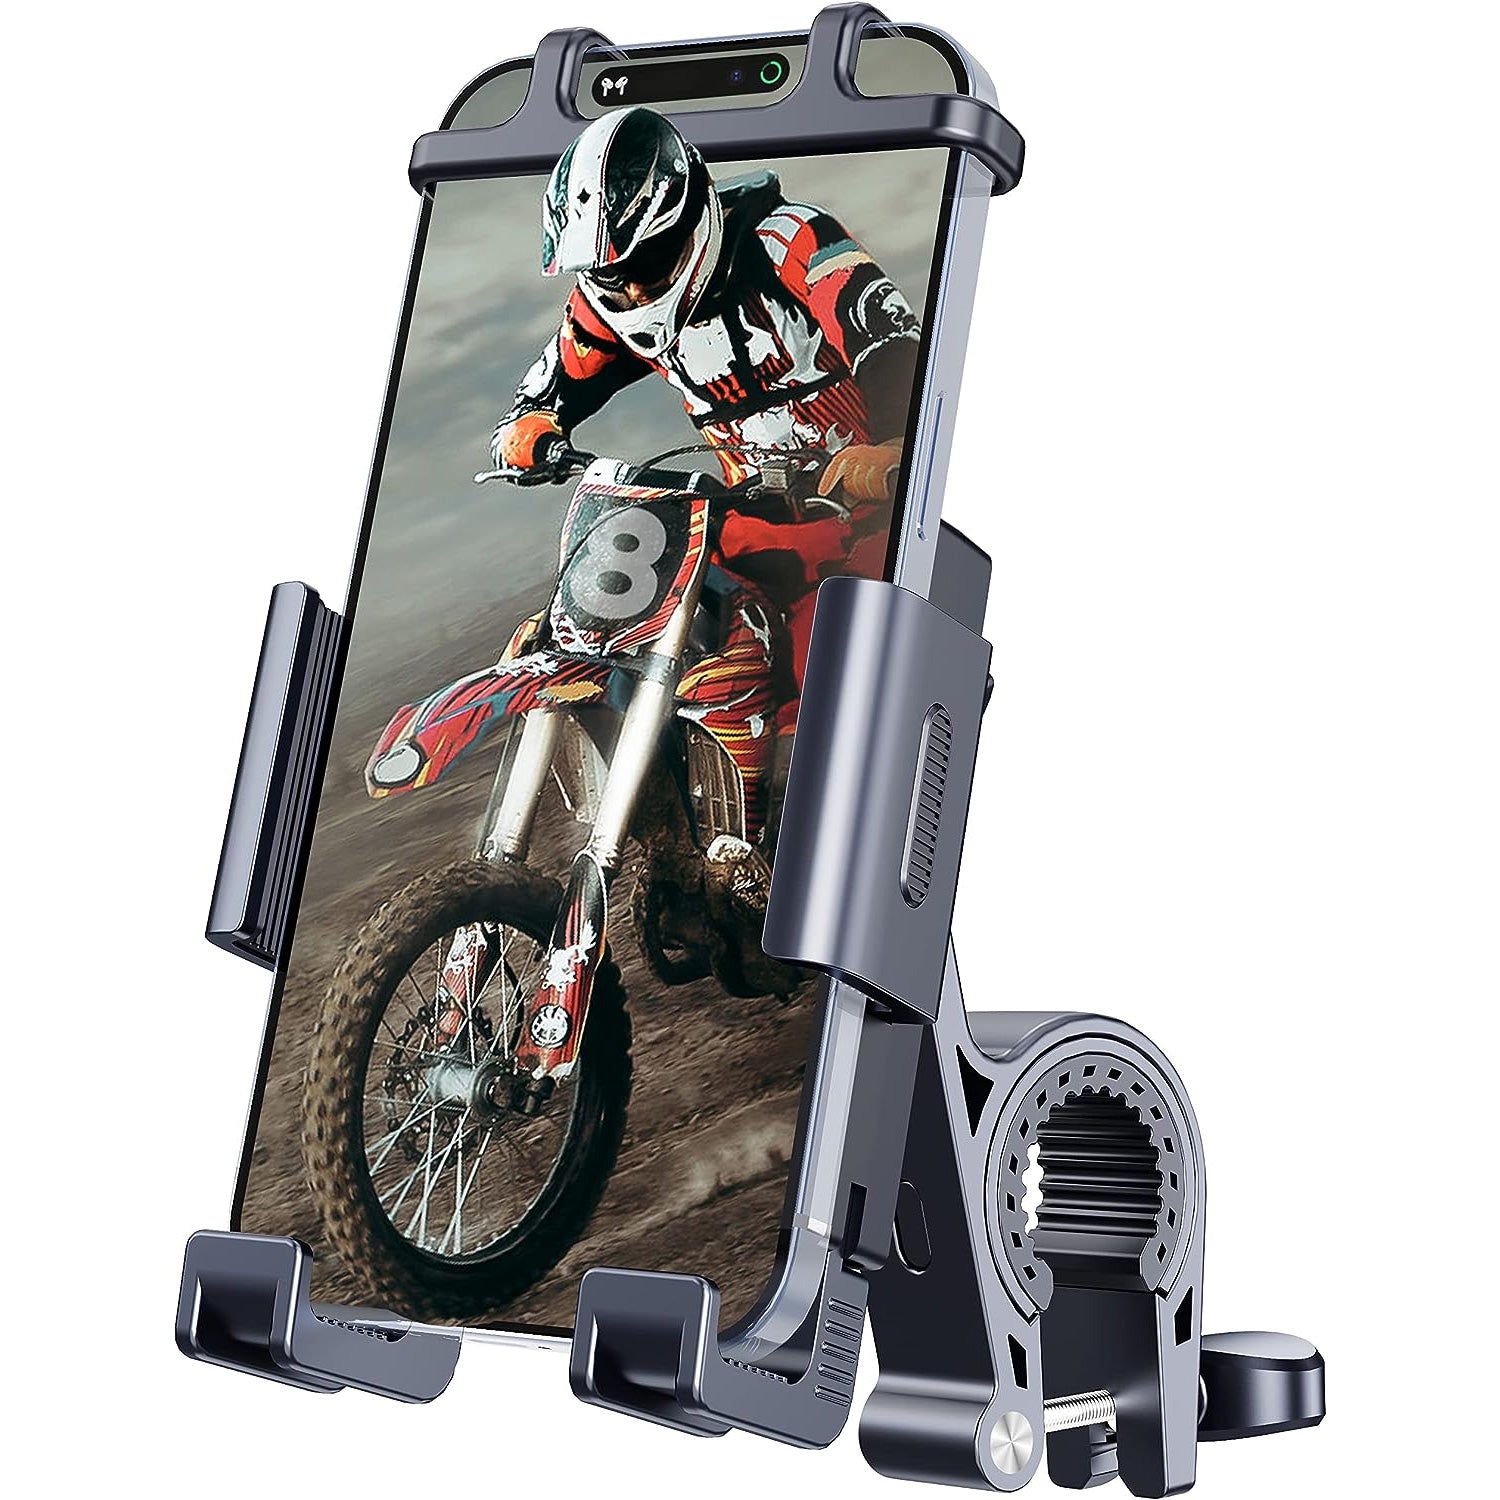 Zuslab Motorcycle Bike Phone Mount for Smartphones